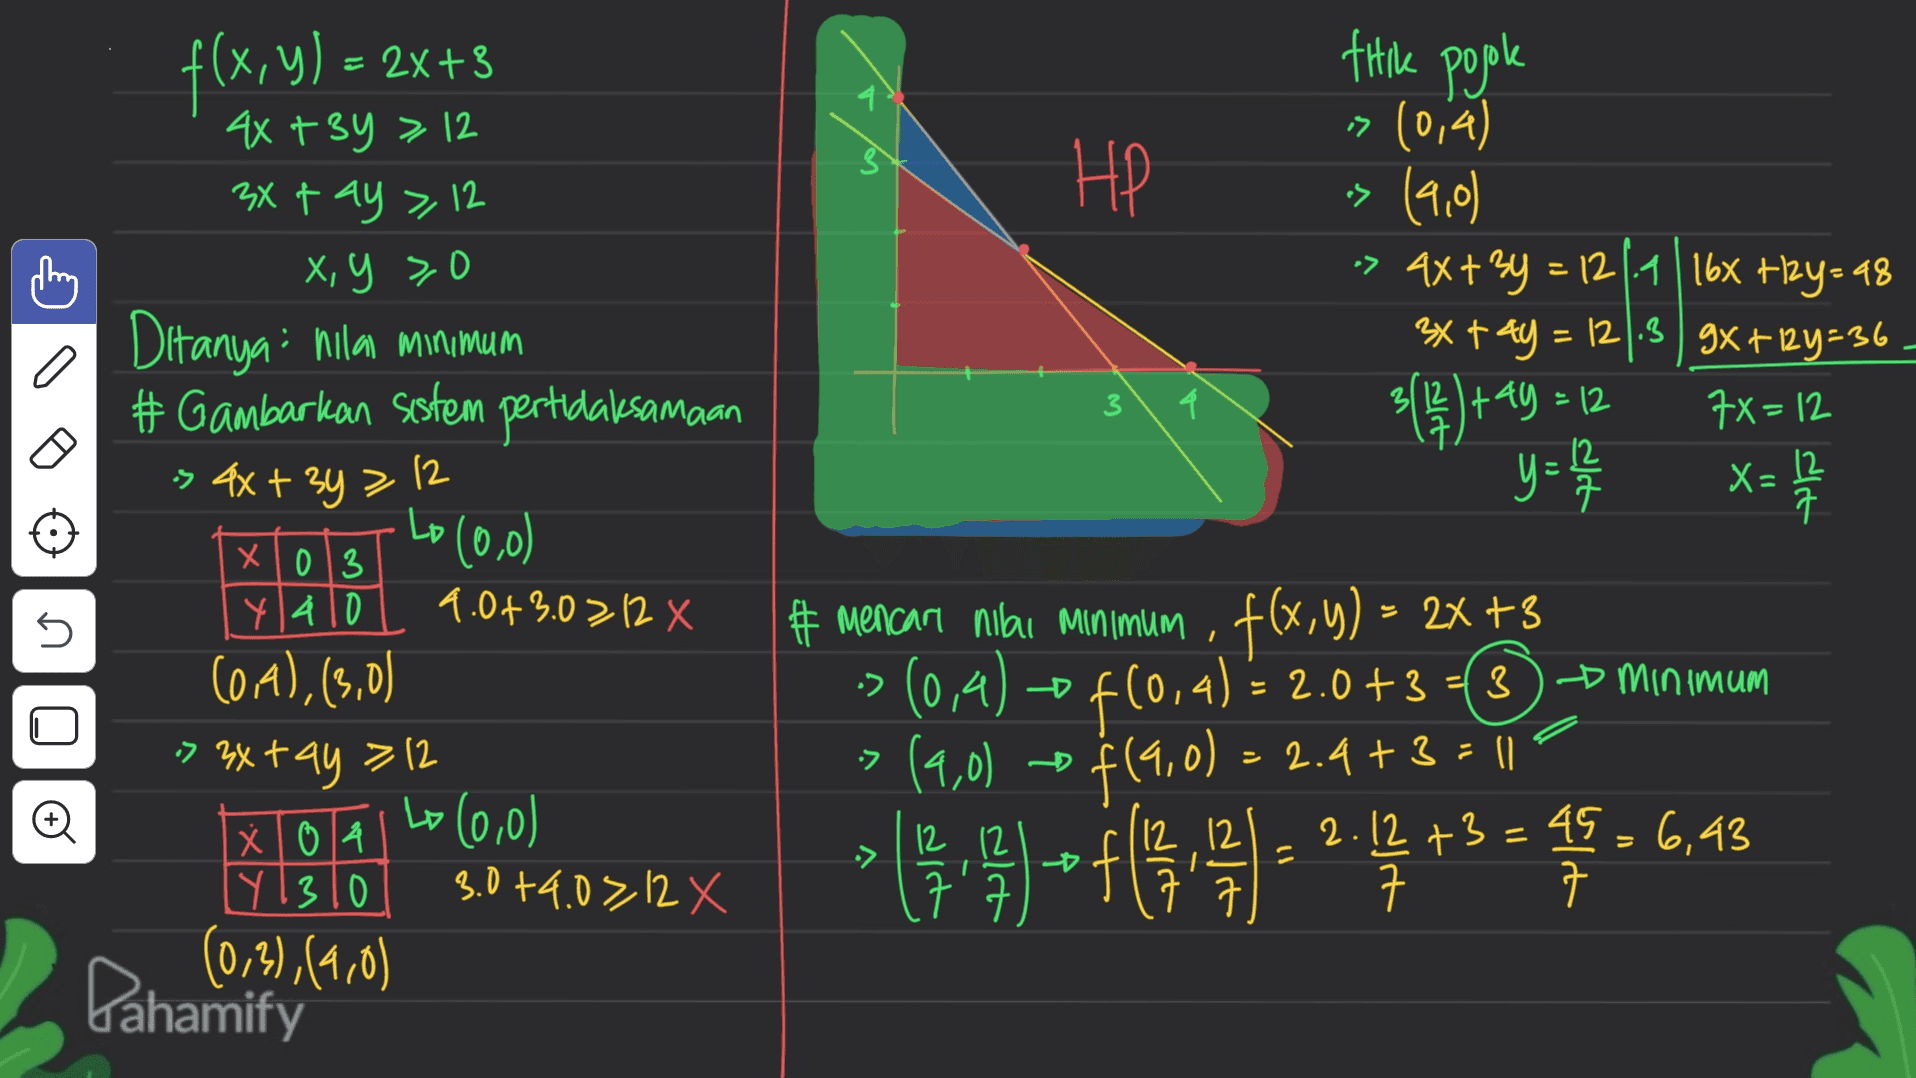 thik pojol HP -> (0,4) > (40) > 4x+3y = 12.1 | 16x +2y=98 3x + 4y = 12/03 | 9X+12y=36 7X=12 y = 174 X=1 a 3 4 3{})+ay - - 12 f(x,y) = 2x +3 4x +34 > 12 3x tay >, 12 x, y so Ditanya : hilan minimum # Gambarkan sistem pertidaksamaan is 4x+3y > 12 "(0,0) 9.0+3.0712 X Coa),(3,0) » 3x tay > 12 10(0,0) x 1014 (11310 3.0+4.03 12 x (0,3),(4,0) Pahamify Lo X1013 n Y 410 • # mencari niku minimum , f(x, y) = 2X +3 (0,4) + f(0,4)= 2.0+3 -3 -- minimum =(4,0) = $(4,0) = 2.4+3 = 1 2.12 +3 = 49 - 6,43 ***** f 13:13-2.42 +3 = 45 - 6,43 